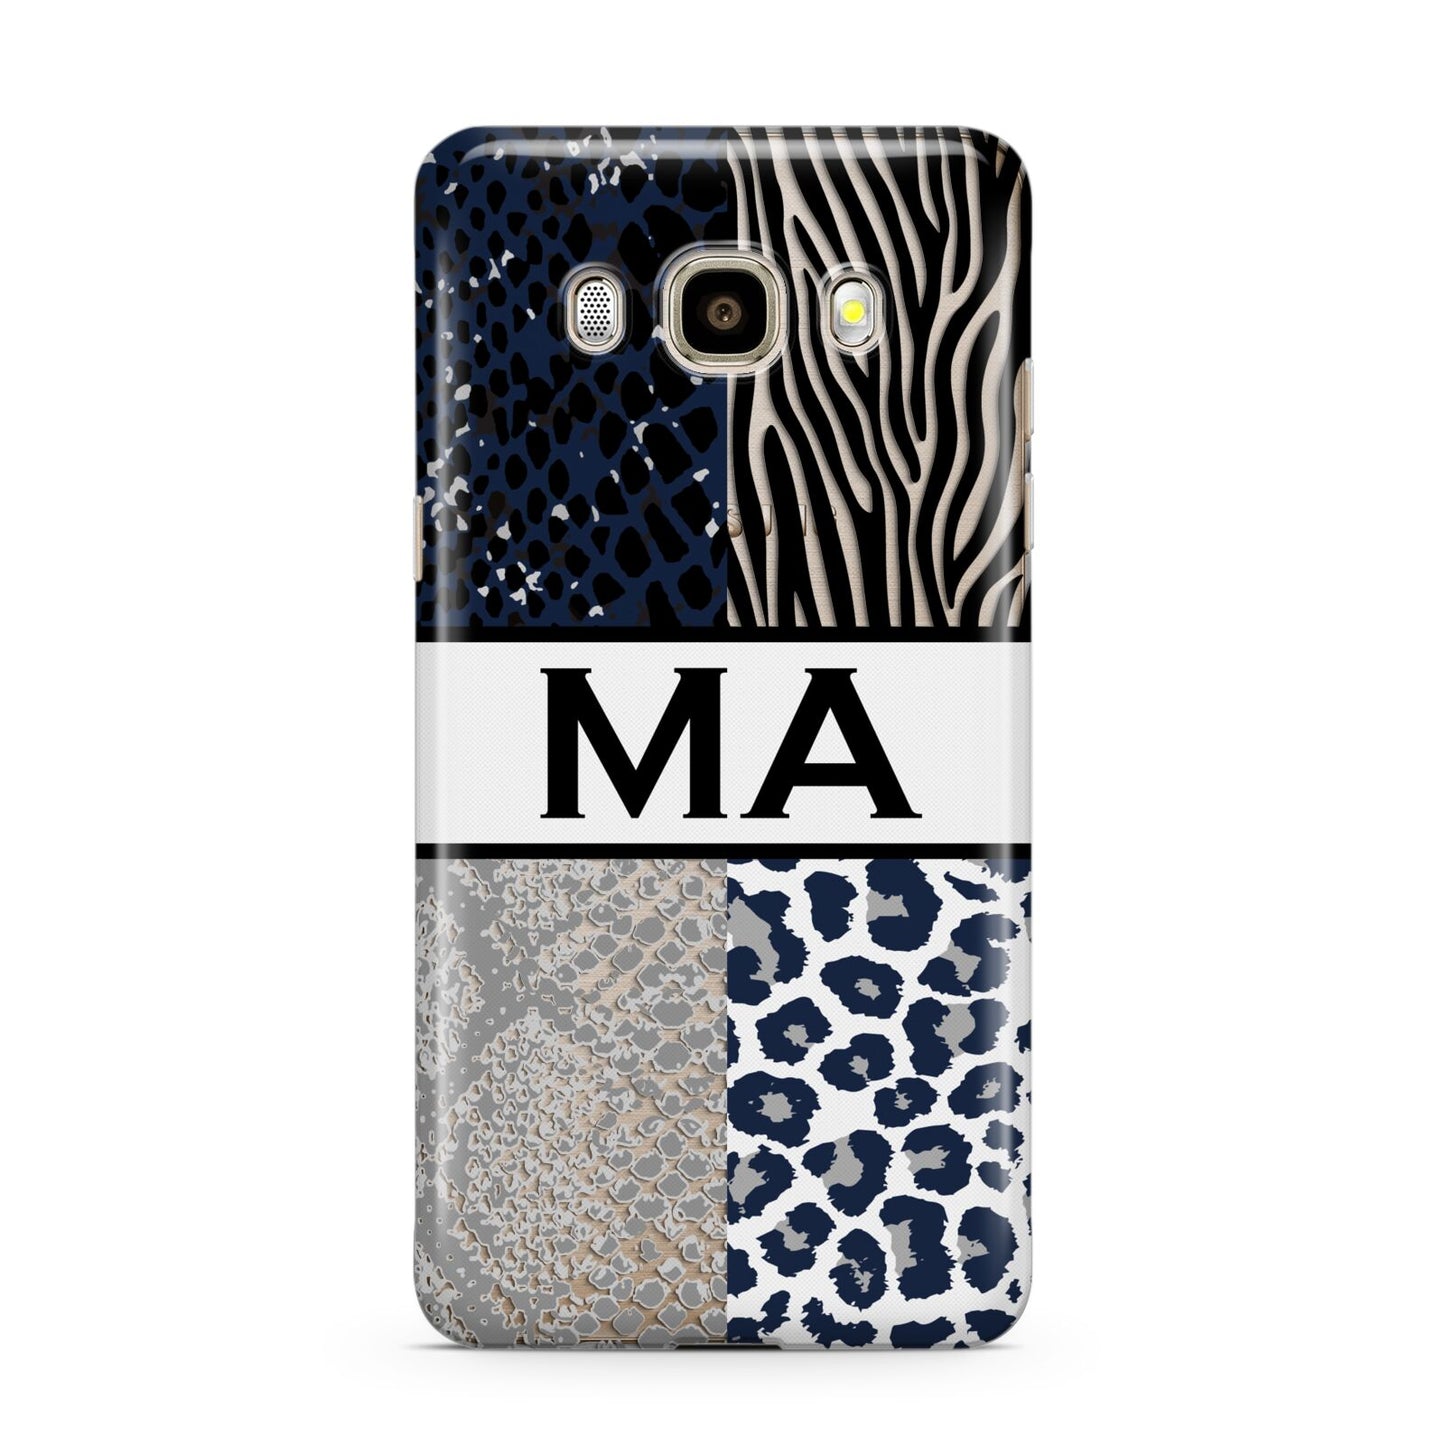 Personalised Animal Print Samsung Galaxy J7 2016 Case on gold phone